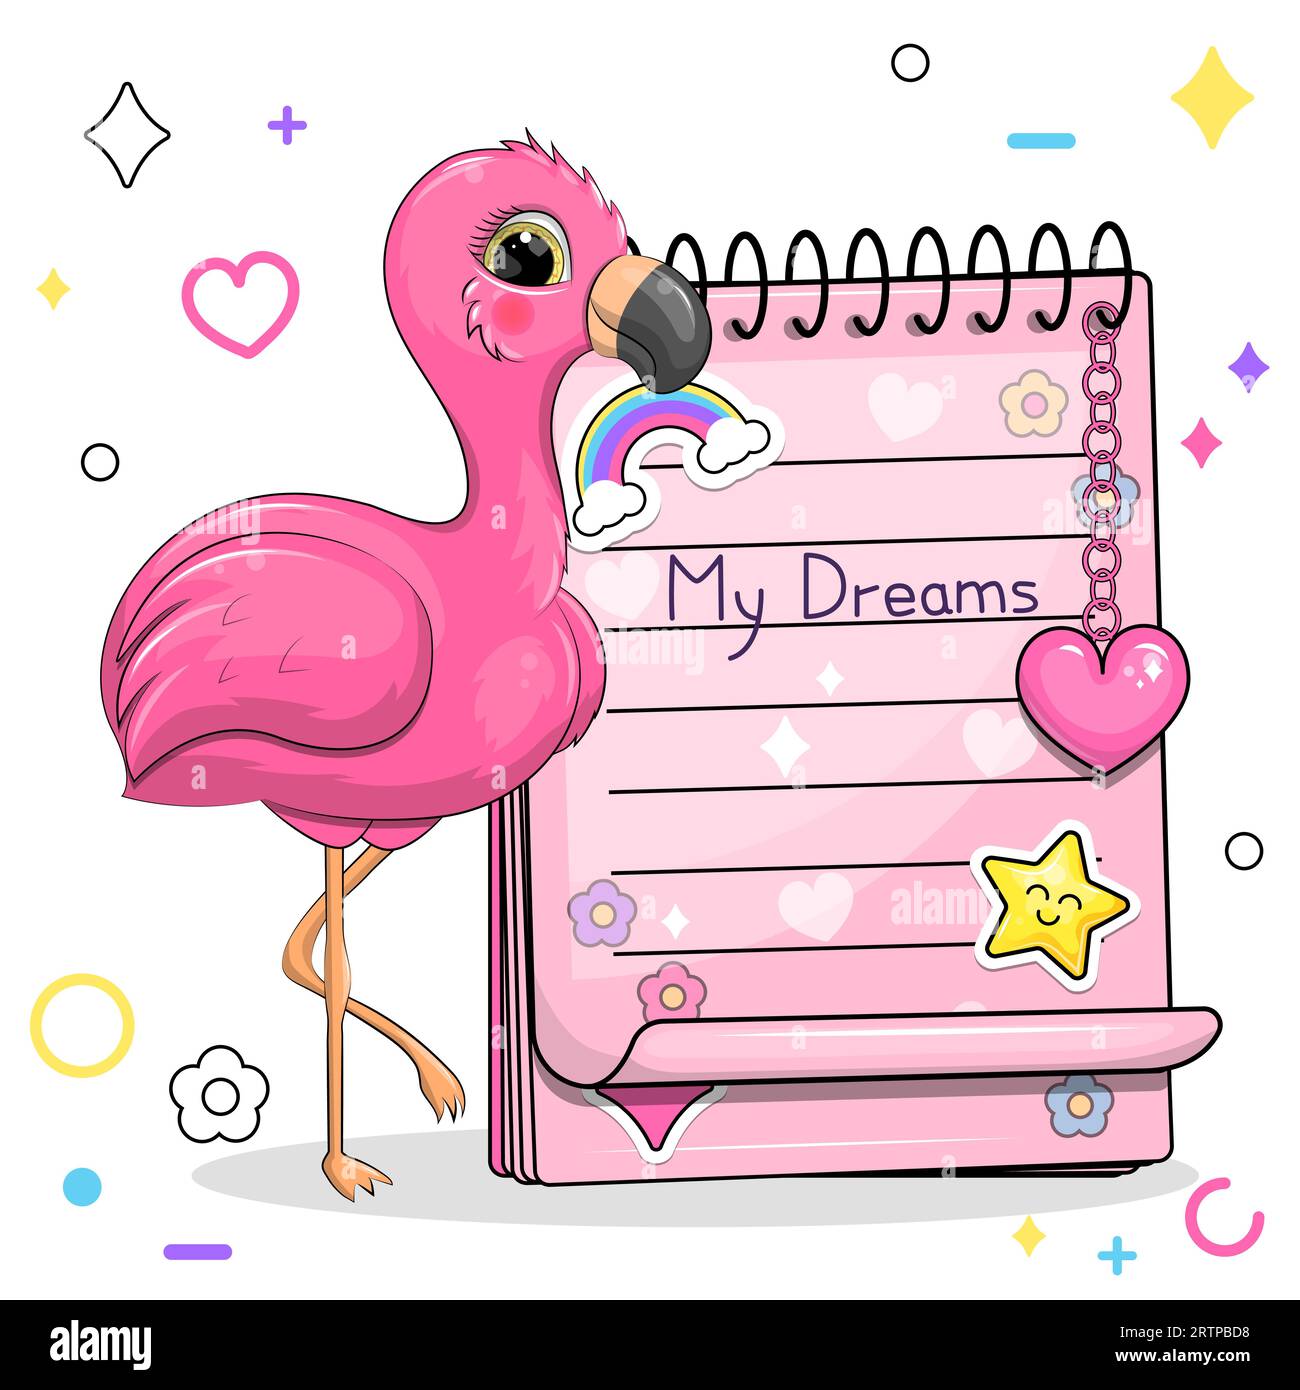 Flamingo Cute Tropical Kids Notebook